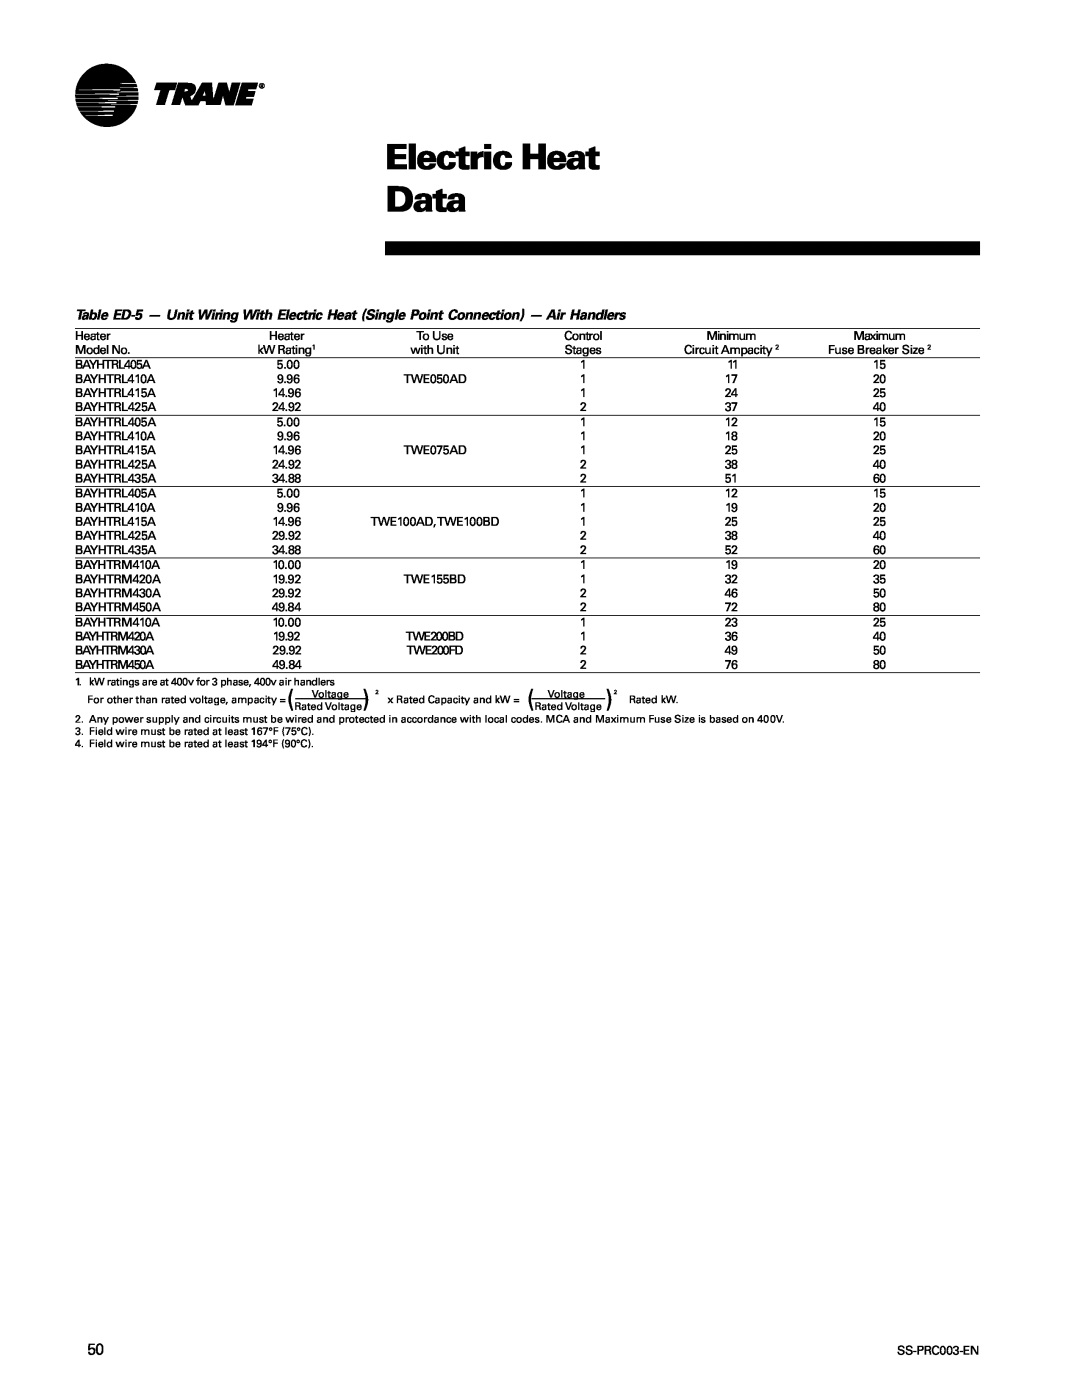 Trane SS-PRC003-EN manual Electric Heat Data 